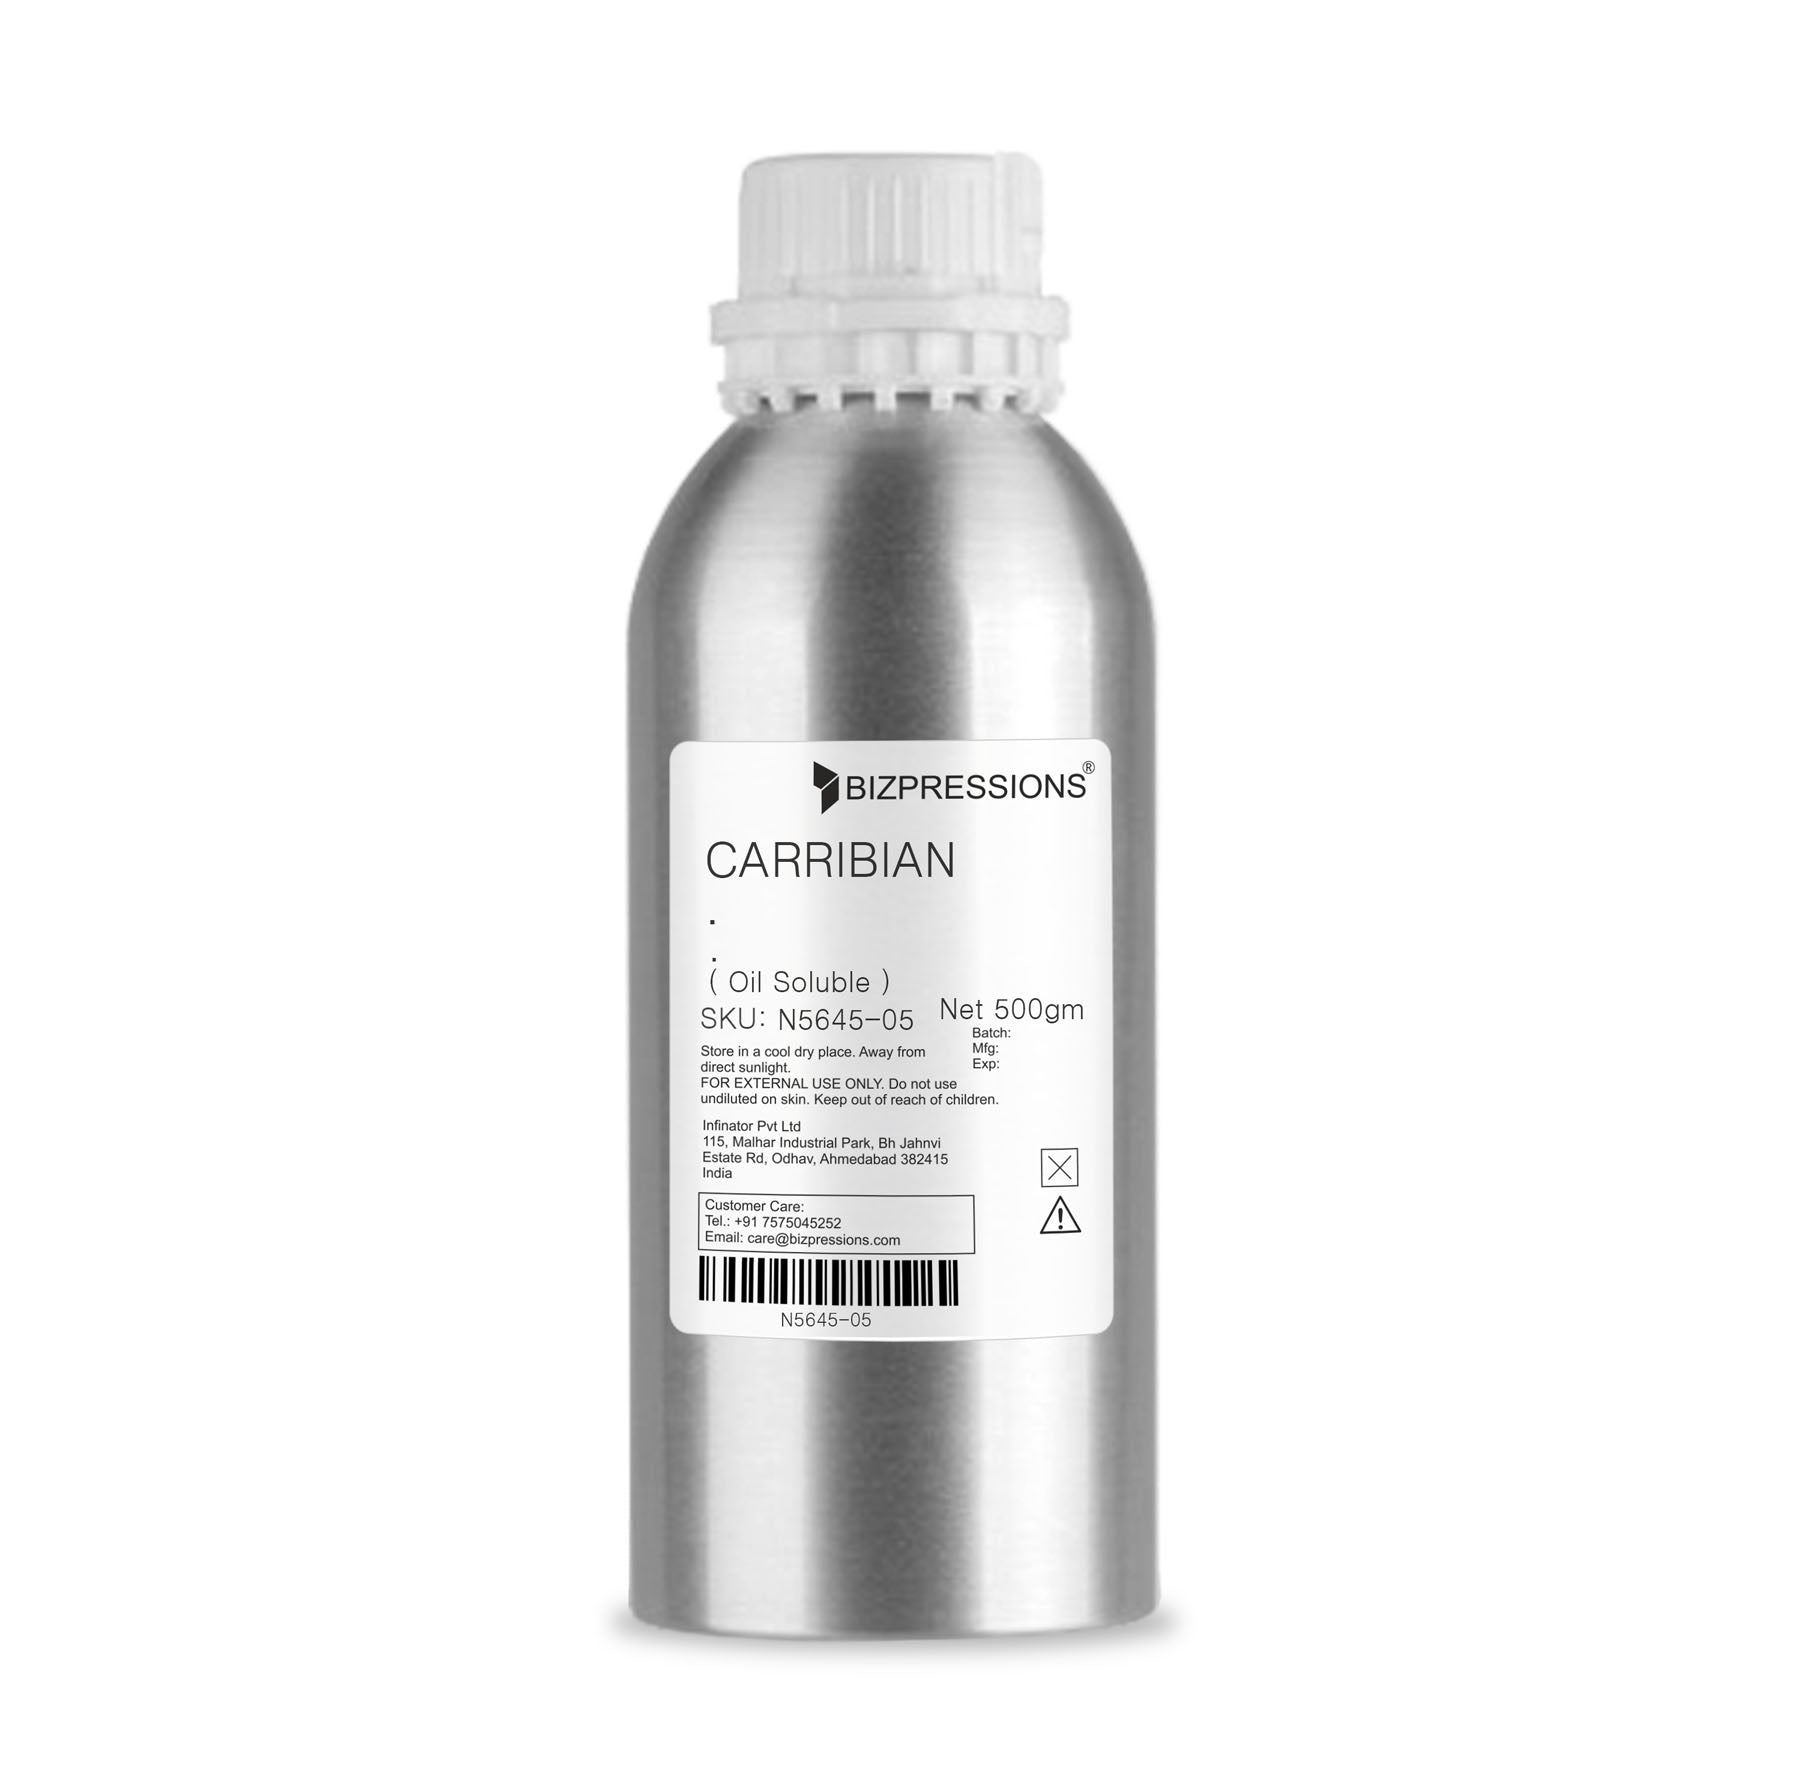 CARRIBIAN - Fragrance ( Oil Soluble ) - 500 gm